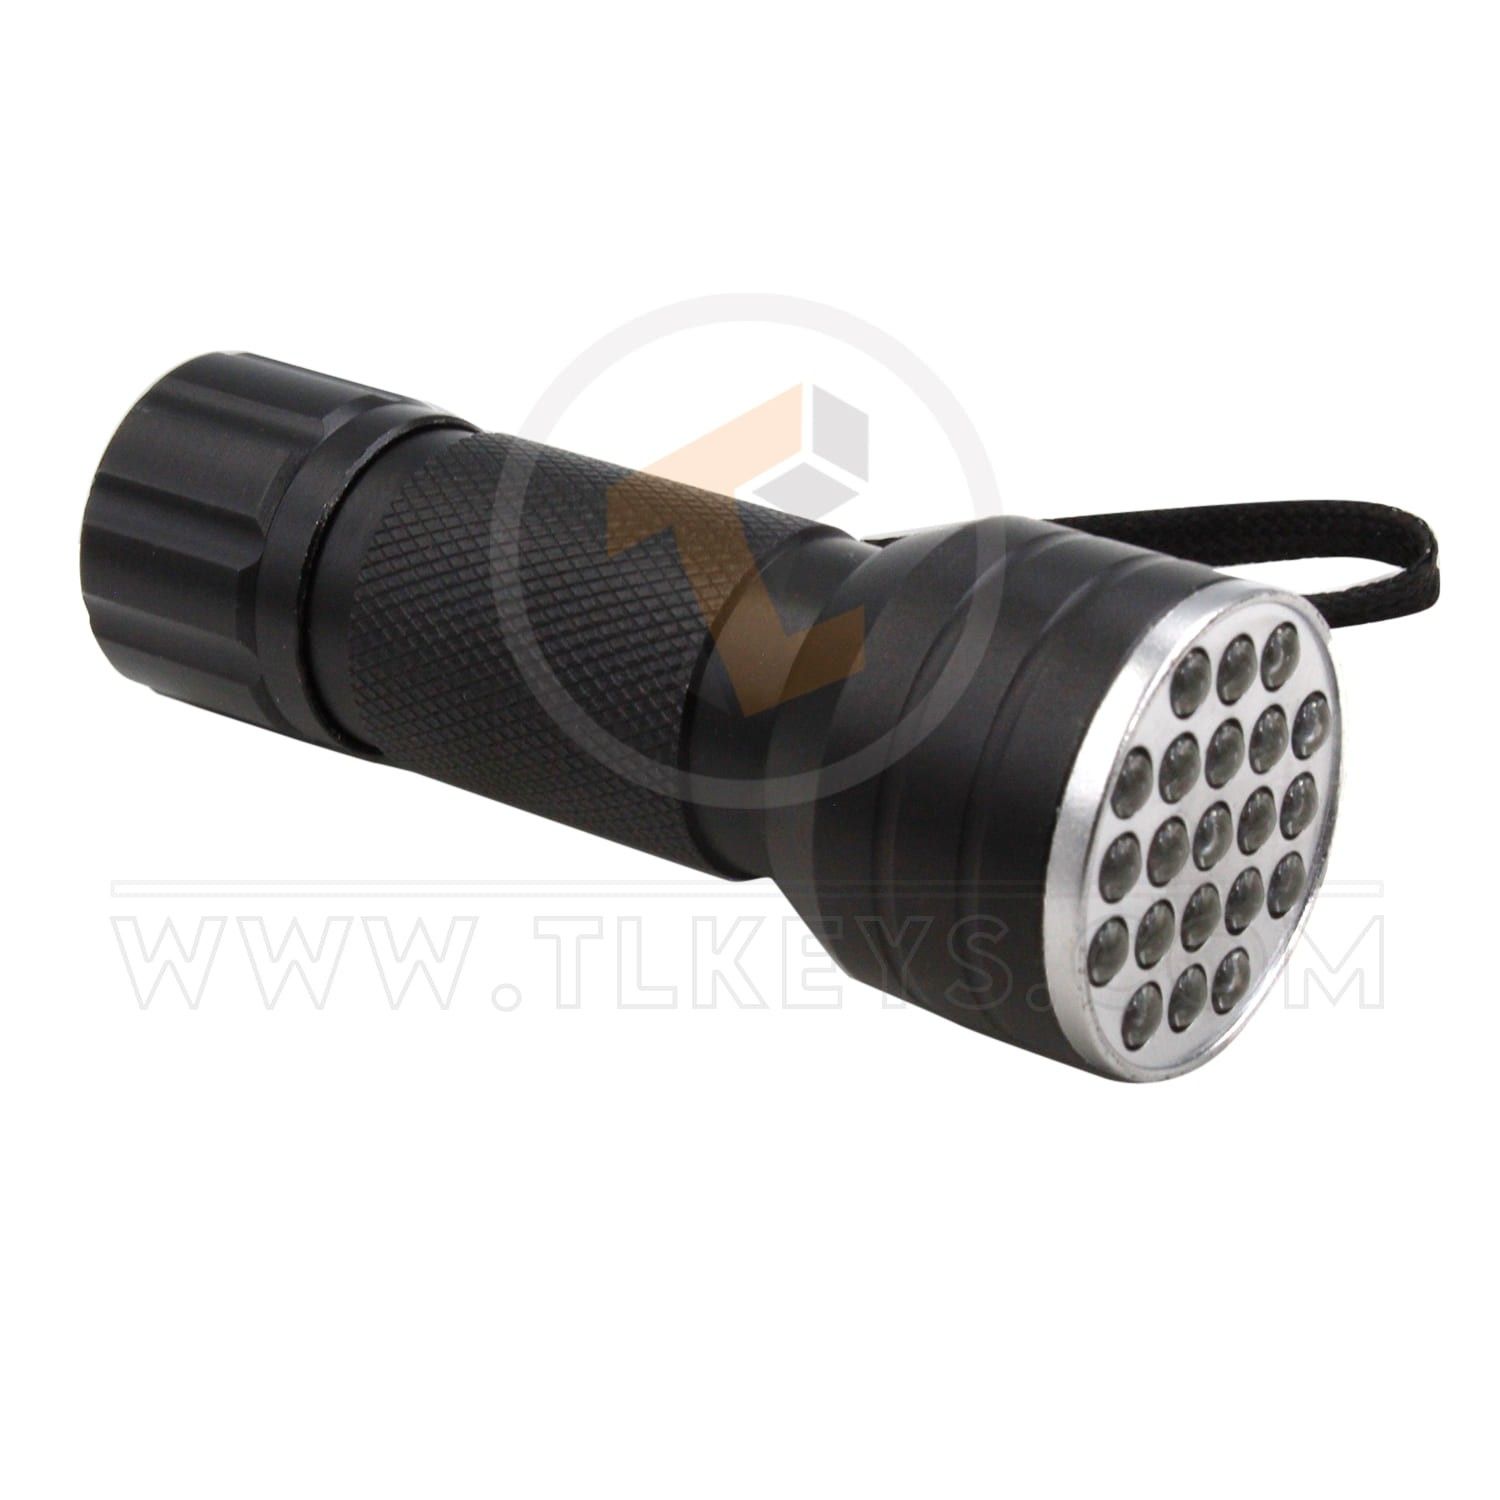 Ultraviolet 21Led UV flashlight accessories tools